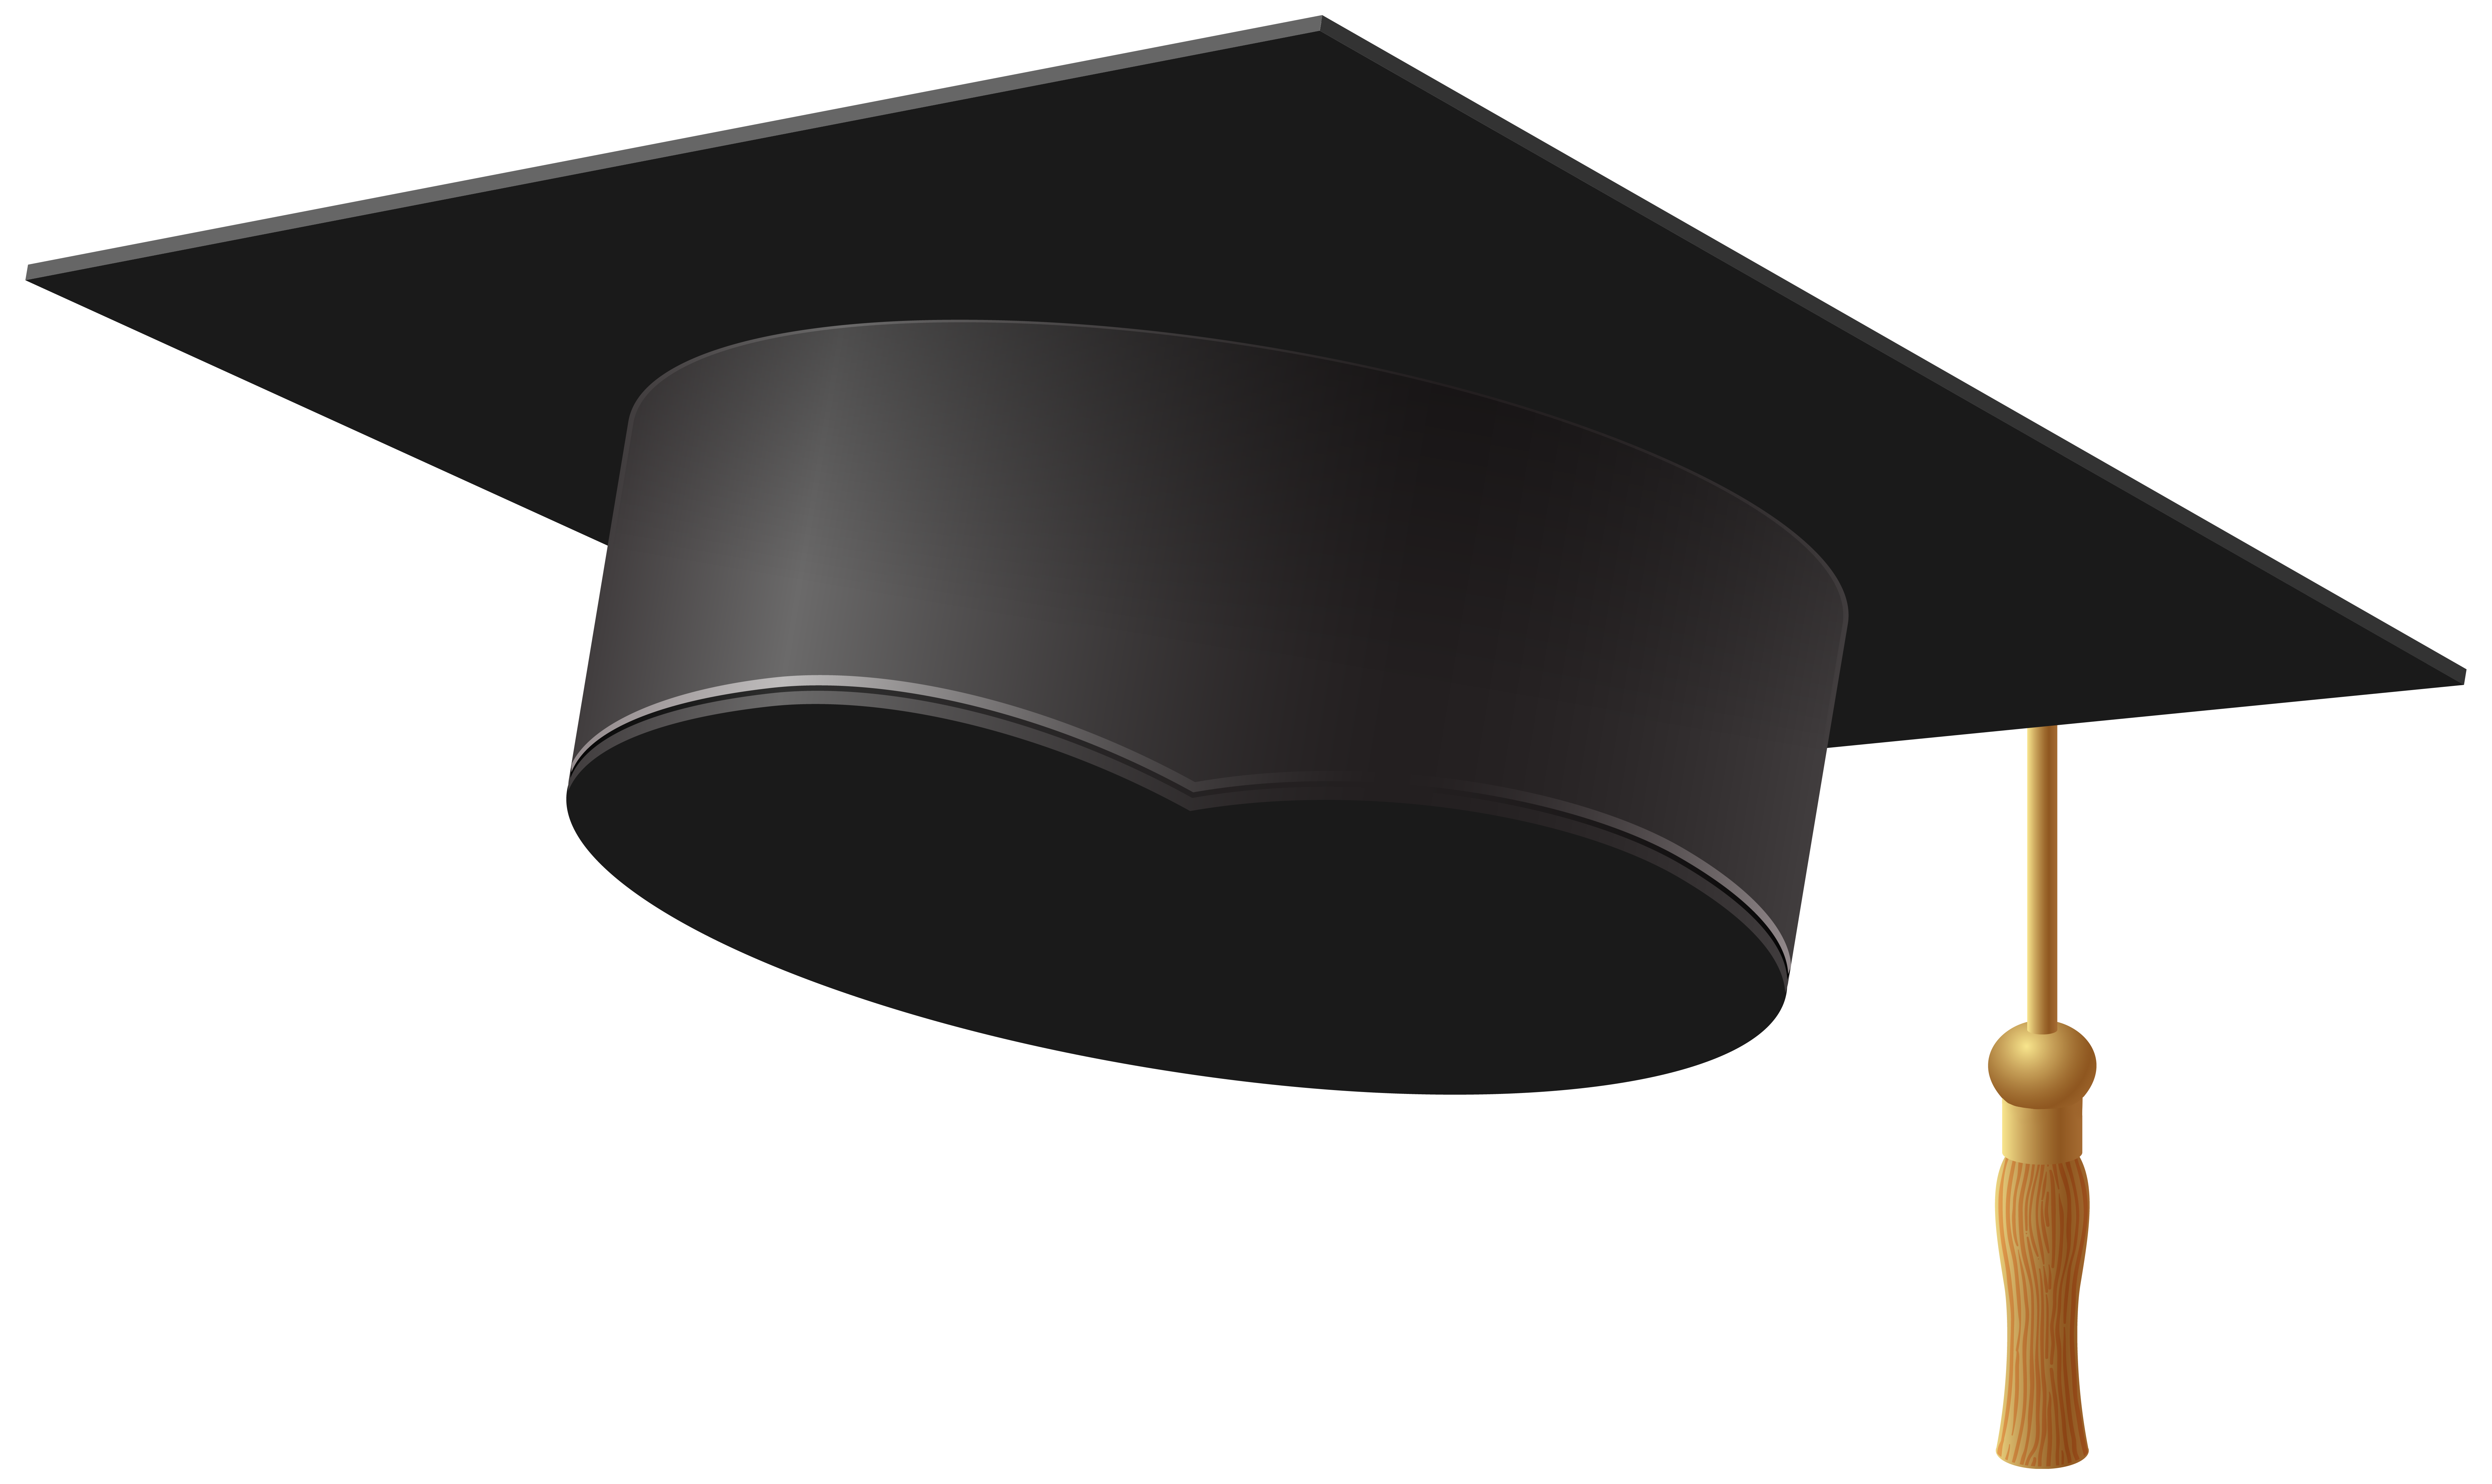 Graduation Hat Clipart. Clipa